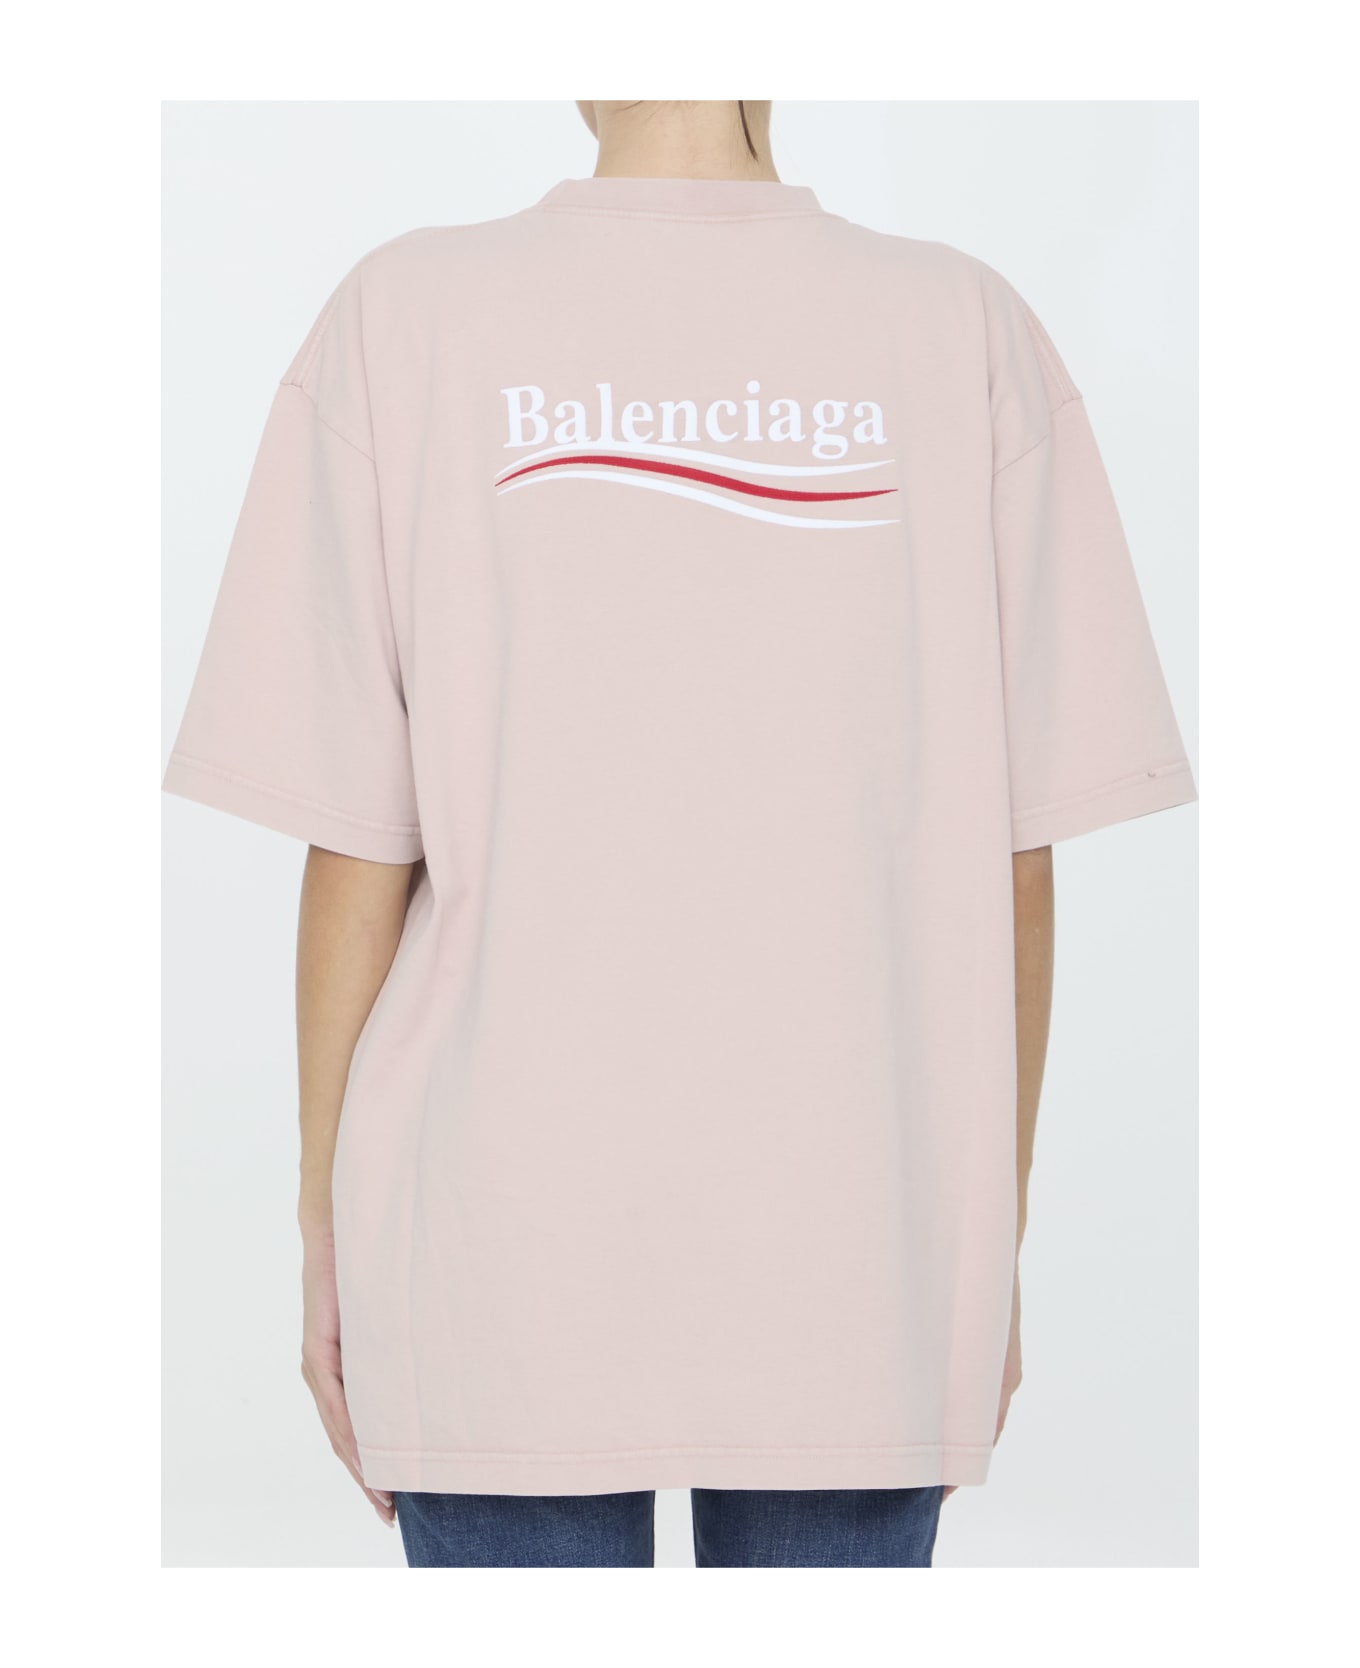 Balenciaga Political Campaign T-shirt - PINK